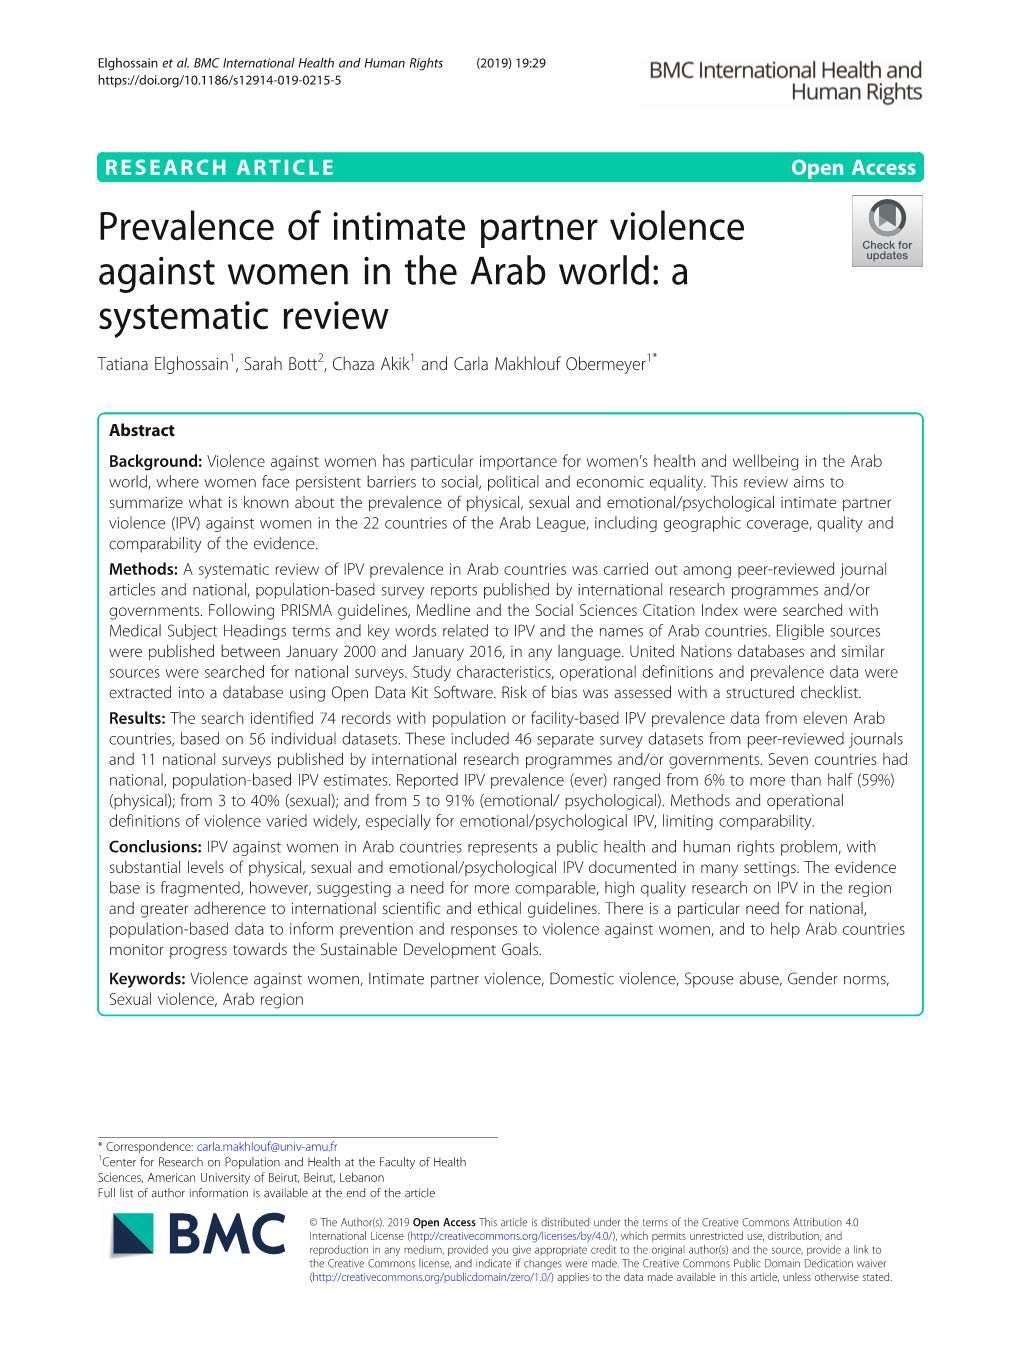 Prevalence of Intimate Partner Violence Against